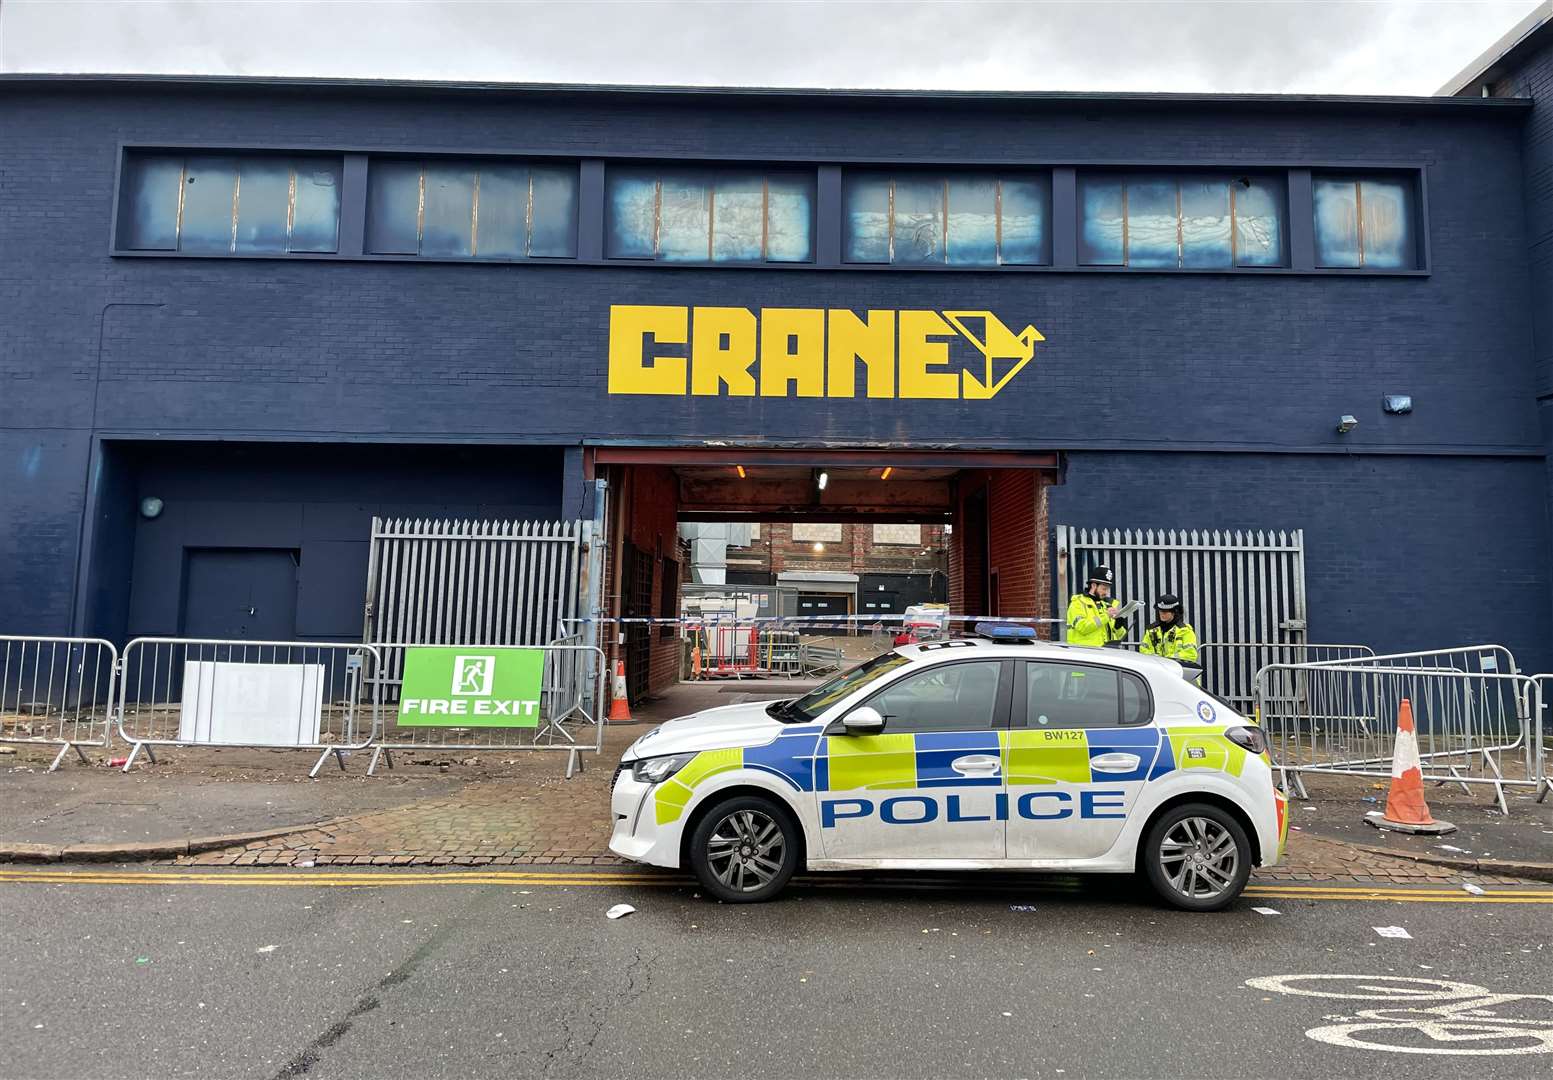 Police outside the Crane nightclub in Digbeth, Birmingham (Phil Barnett/PA)